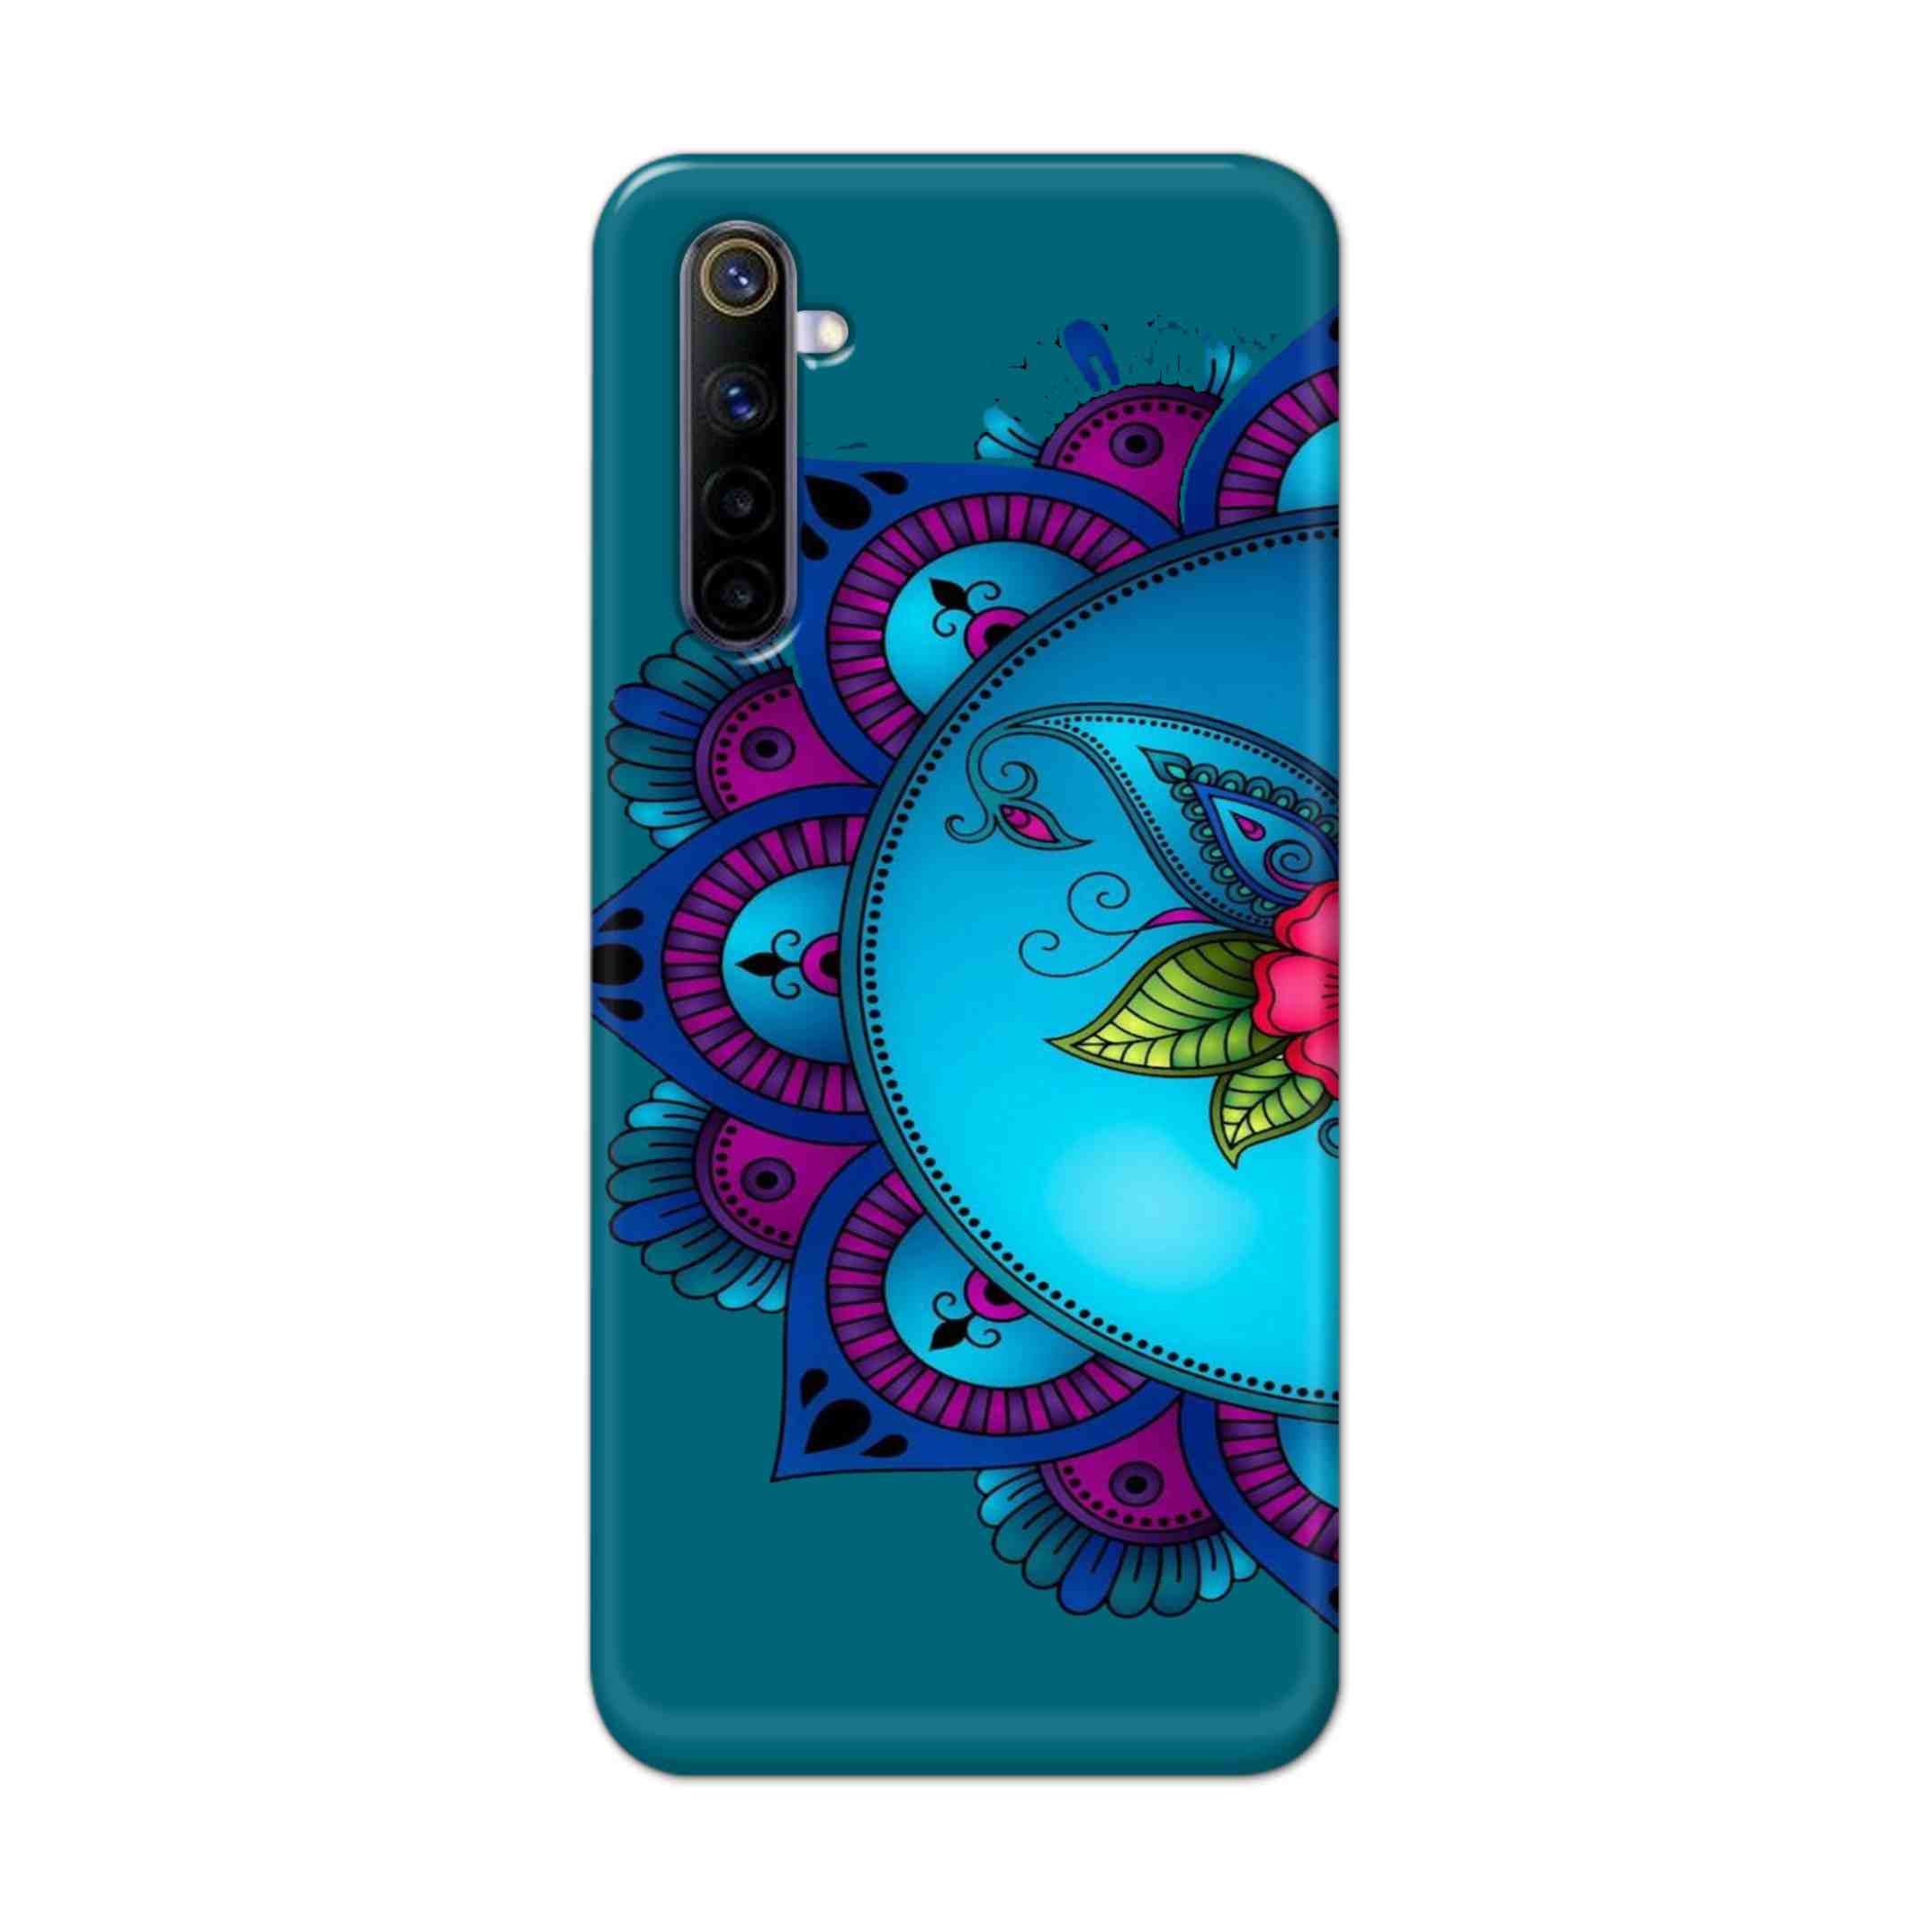 Buy Star Mandala Hard Back Mobile Phone Case Cover For REALME 6 PRO Online